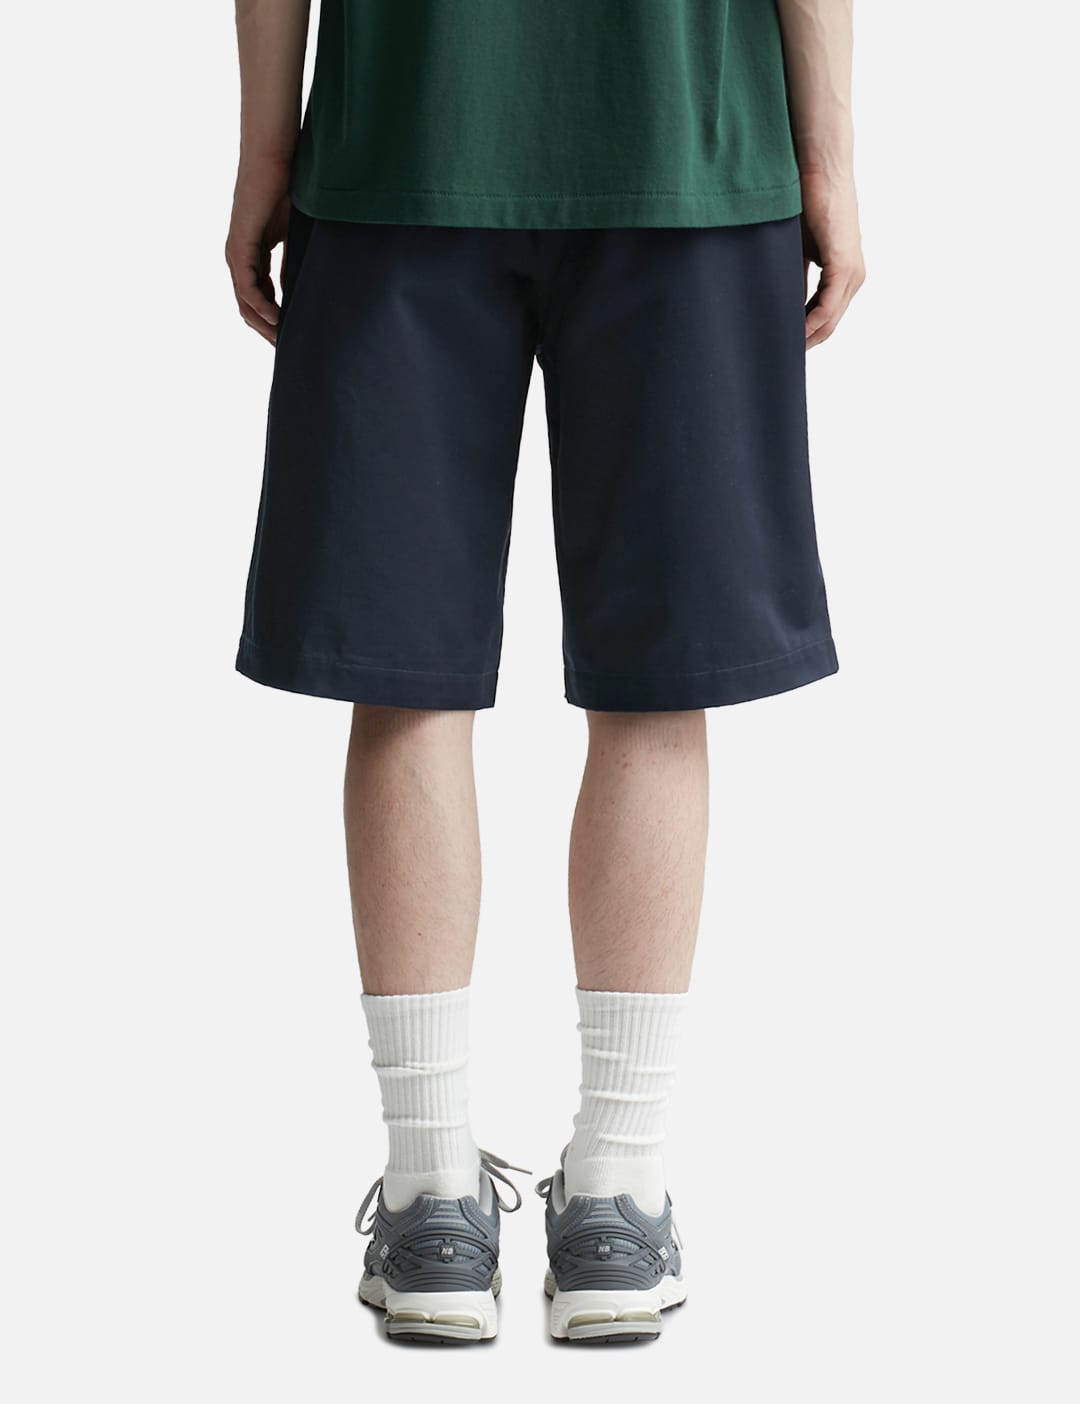 BoTT - 2 Tuck Chino Shorts | HBX - Globally Curated Fashion and 